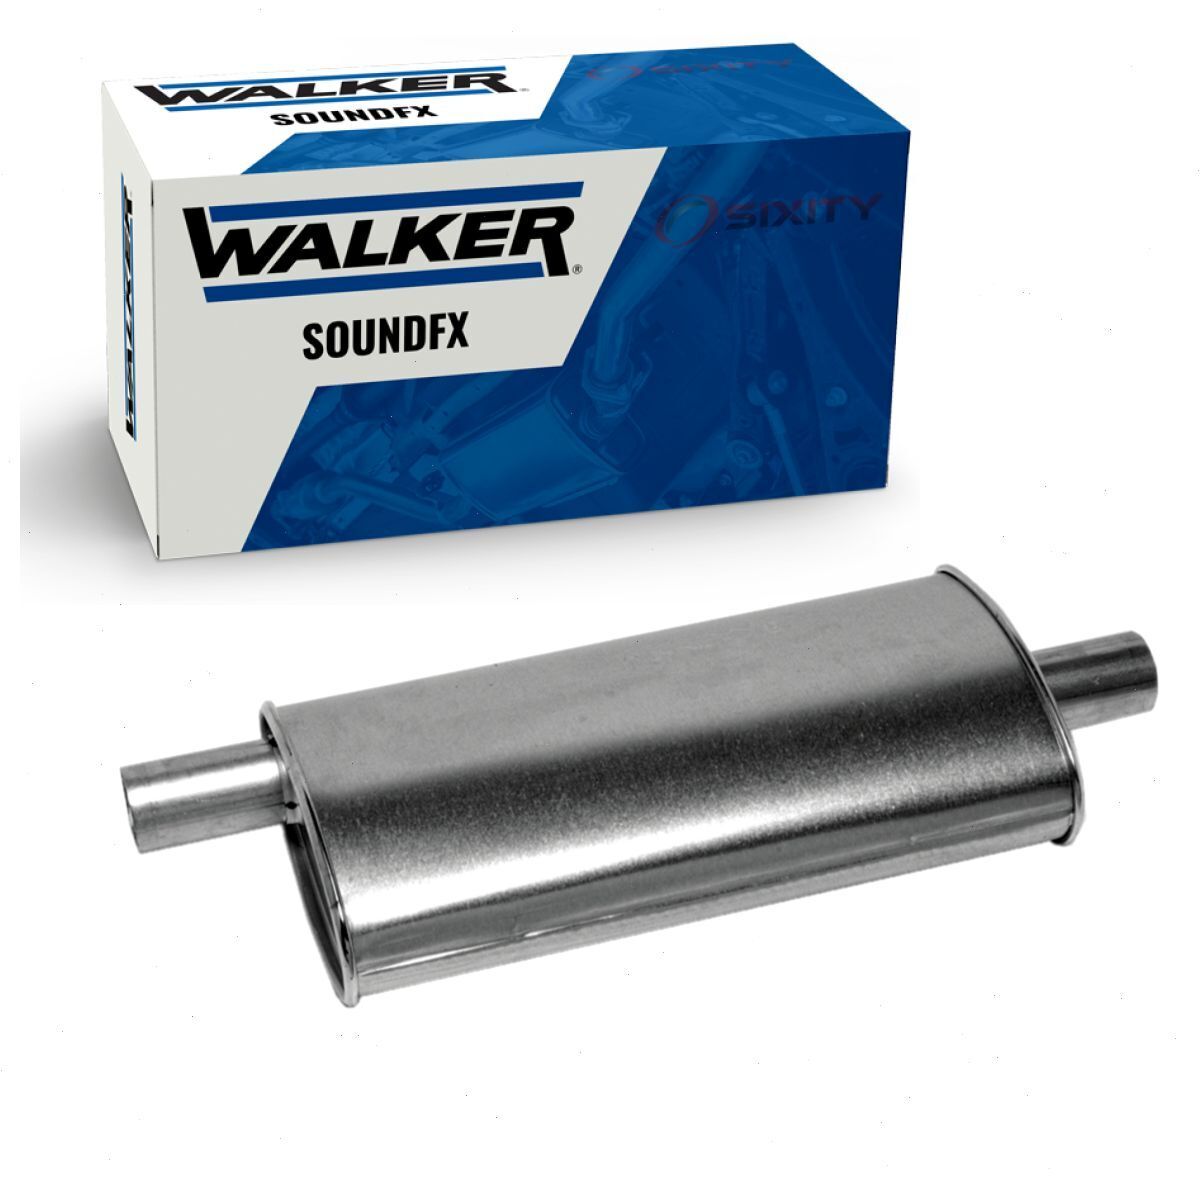 Walker SoundFX 18112 Exhaust Muffler for Mufflers  ef